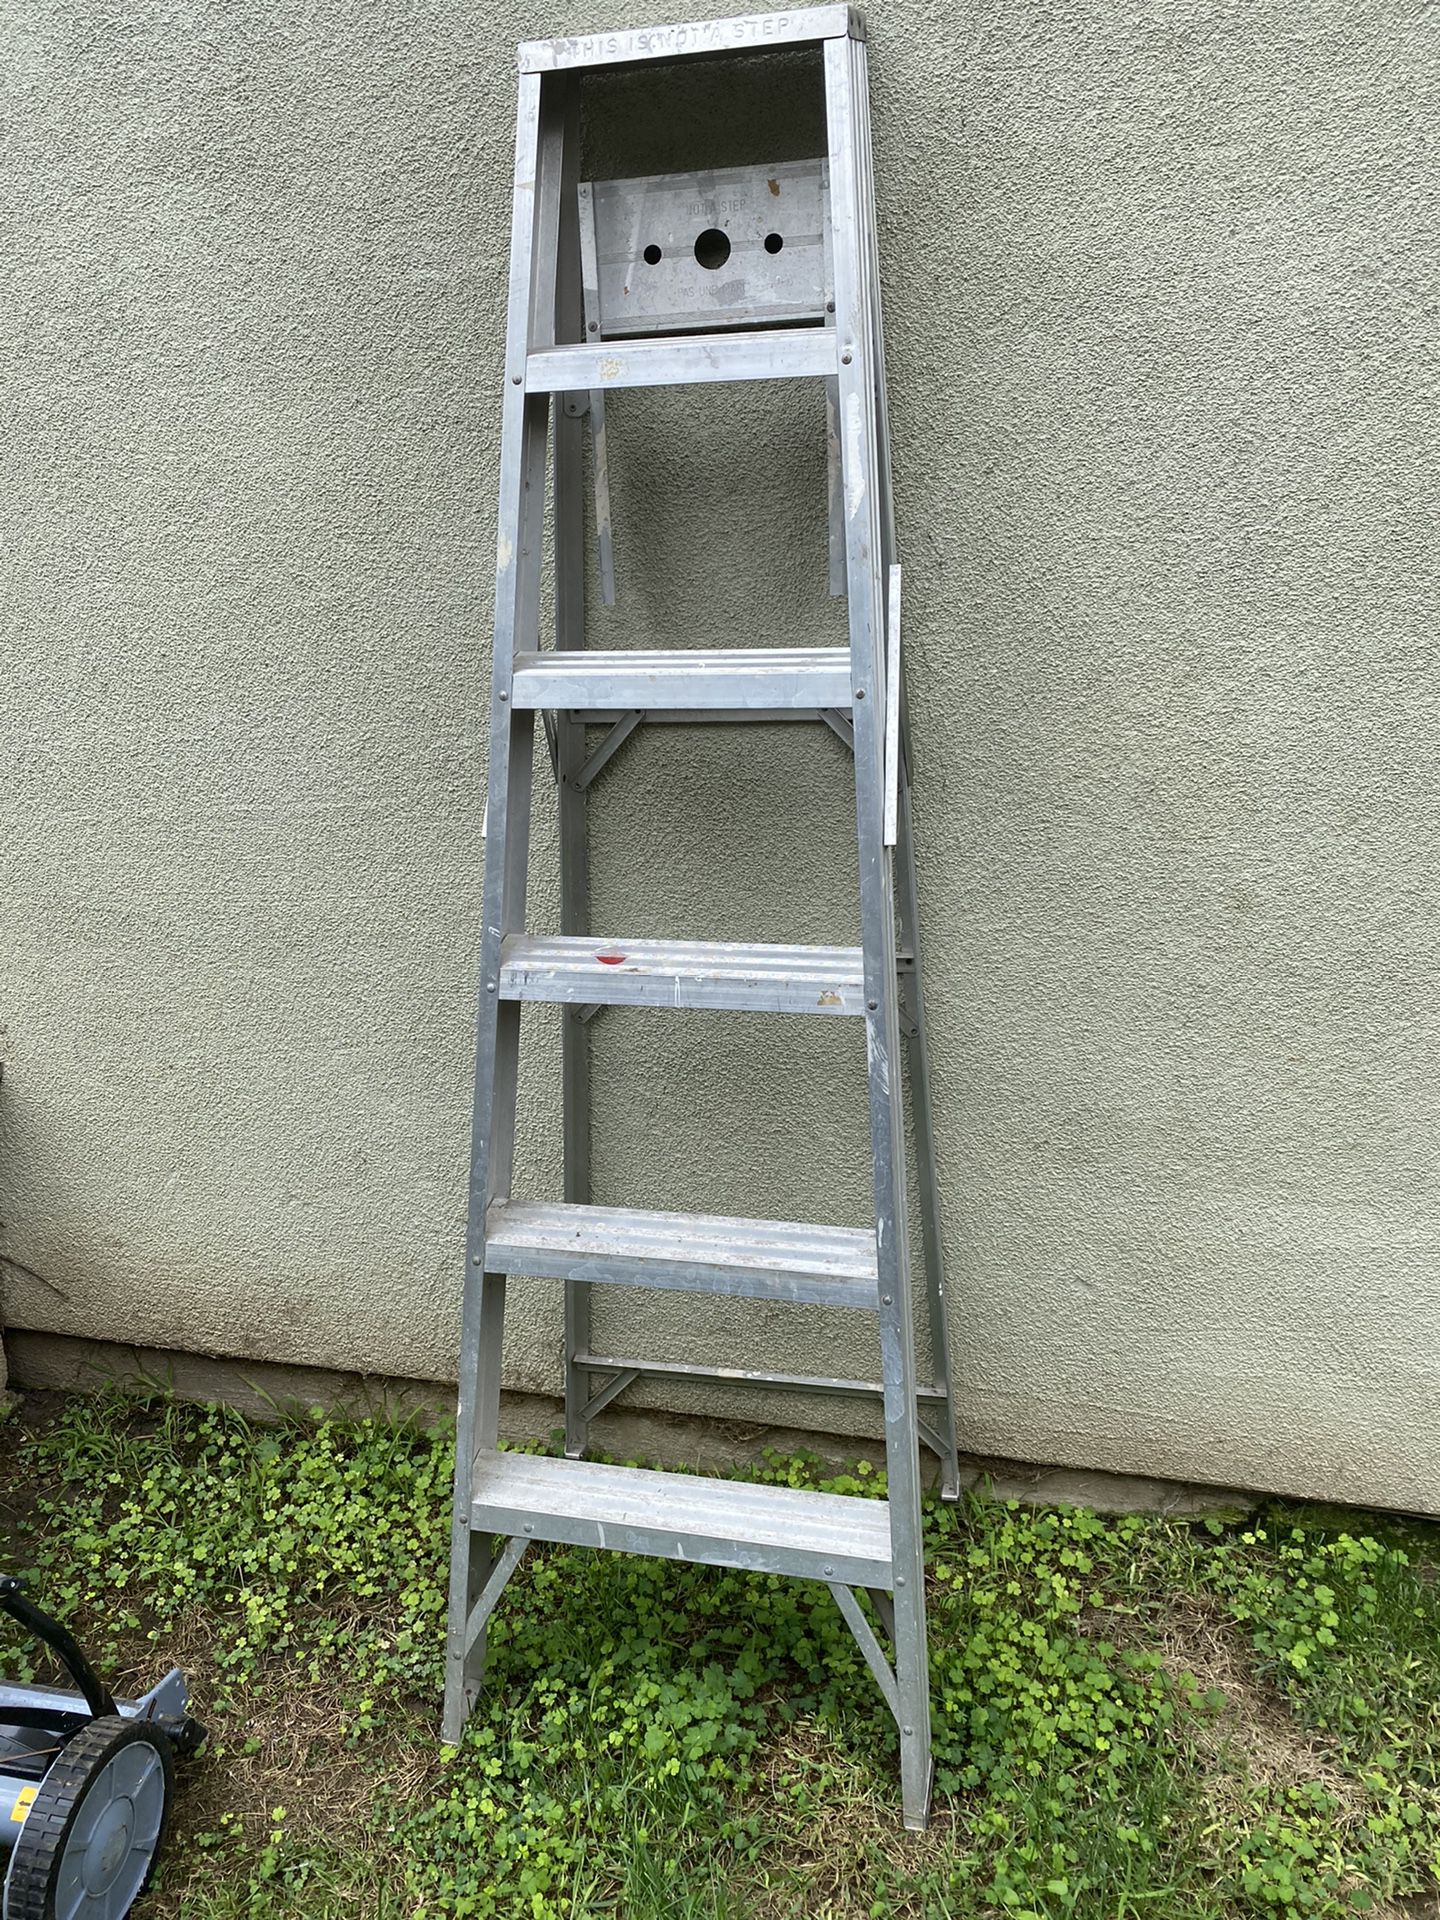 6’ A-frame ladder